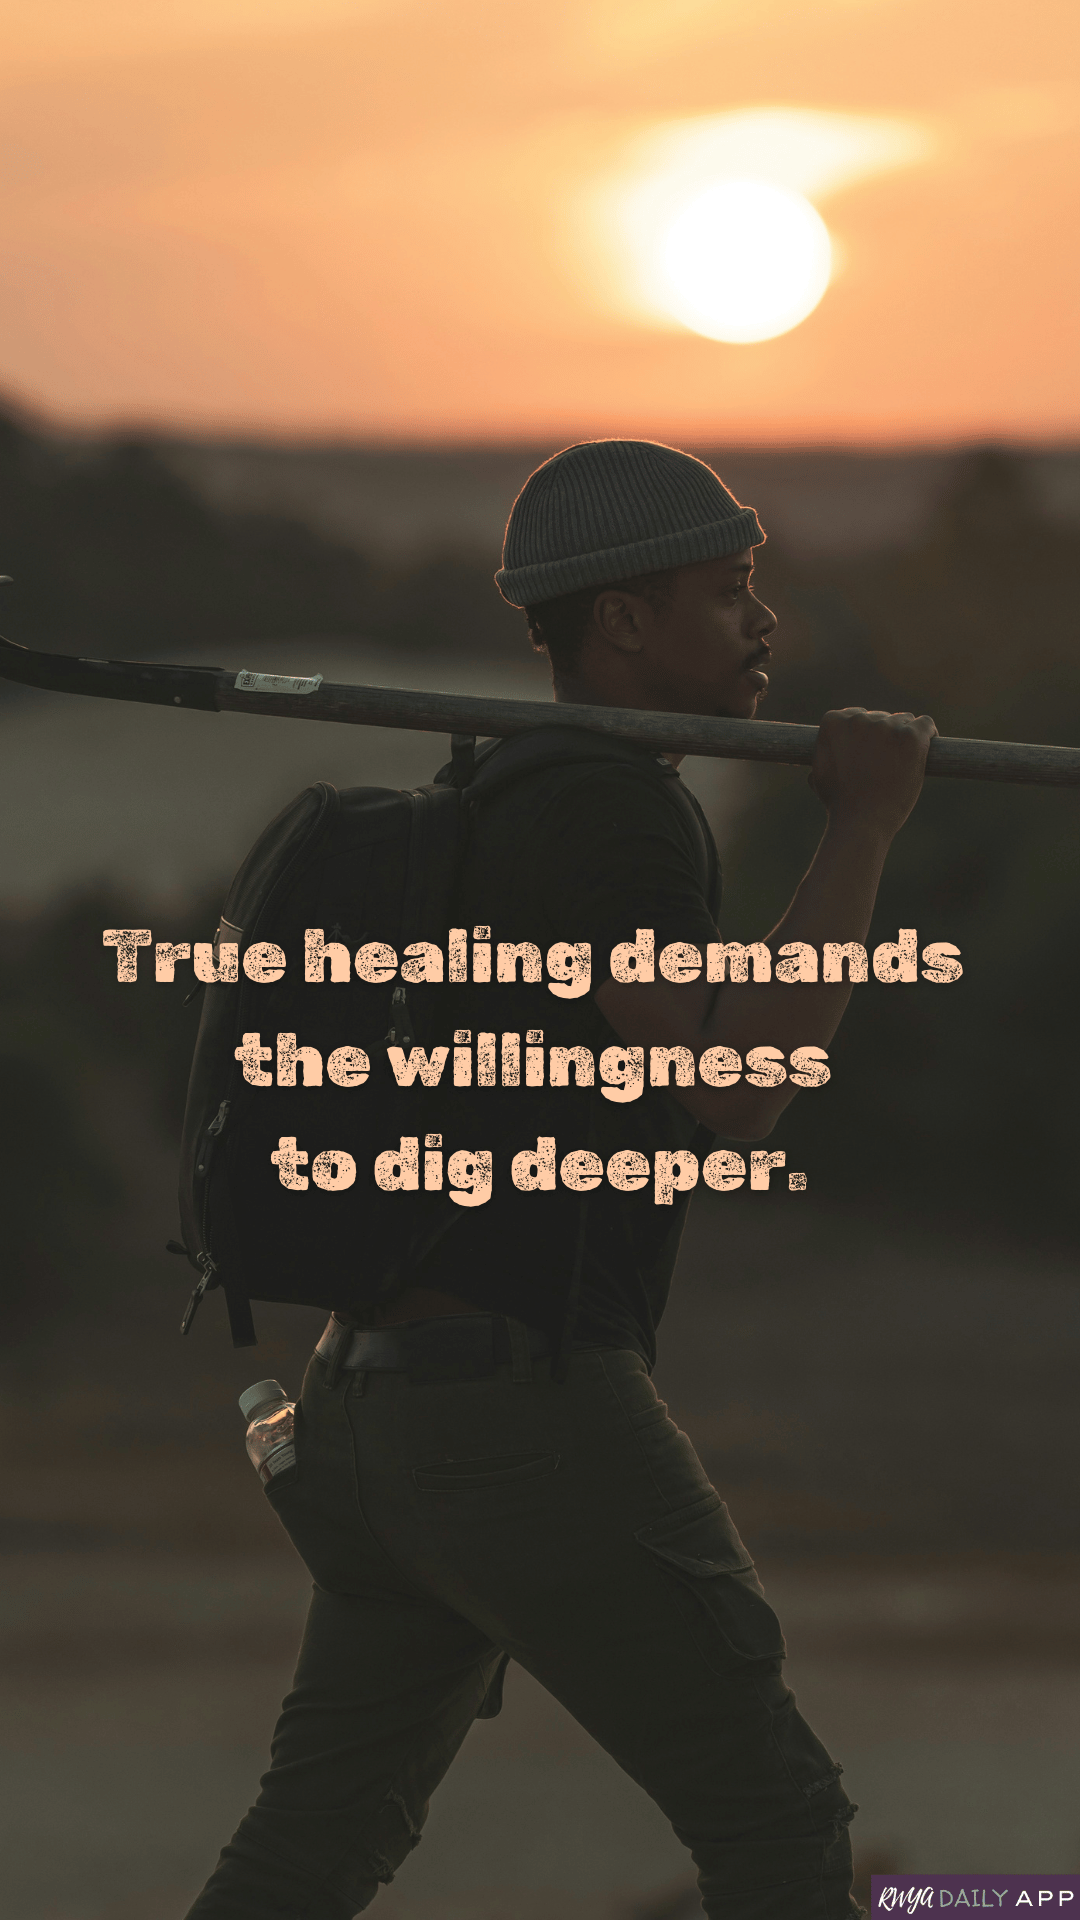 True healing demands the willingness to dig deeper.